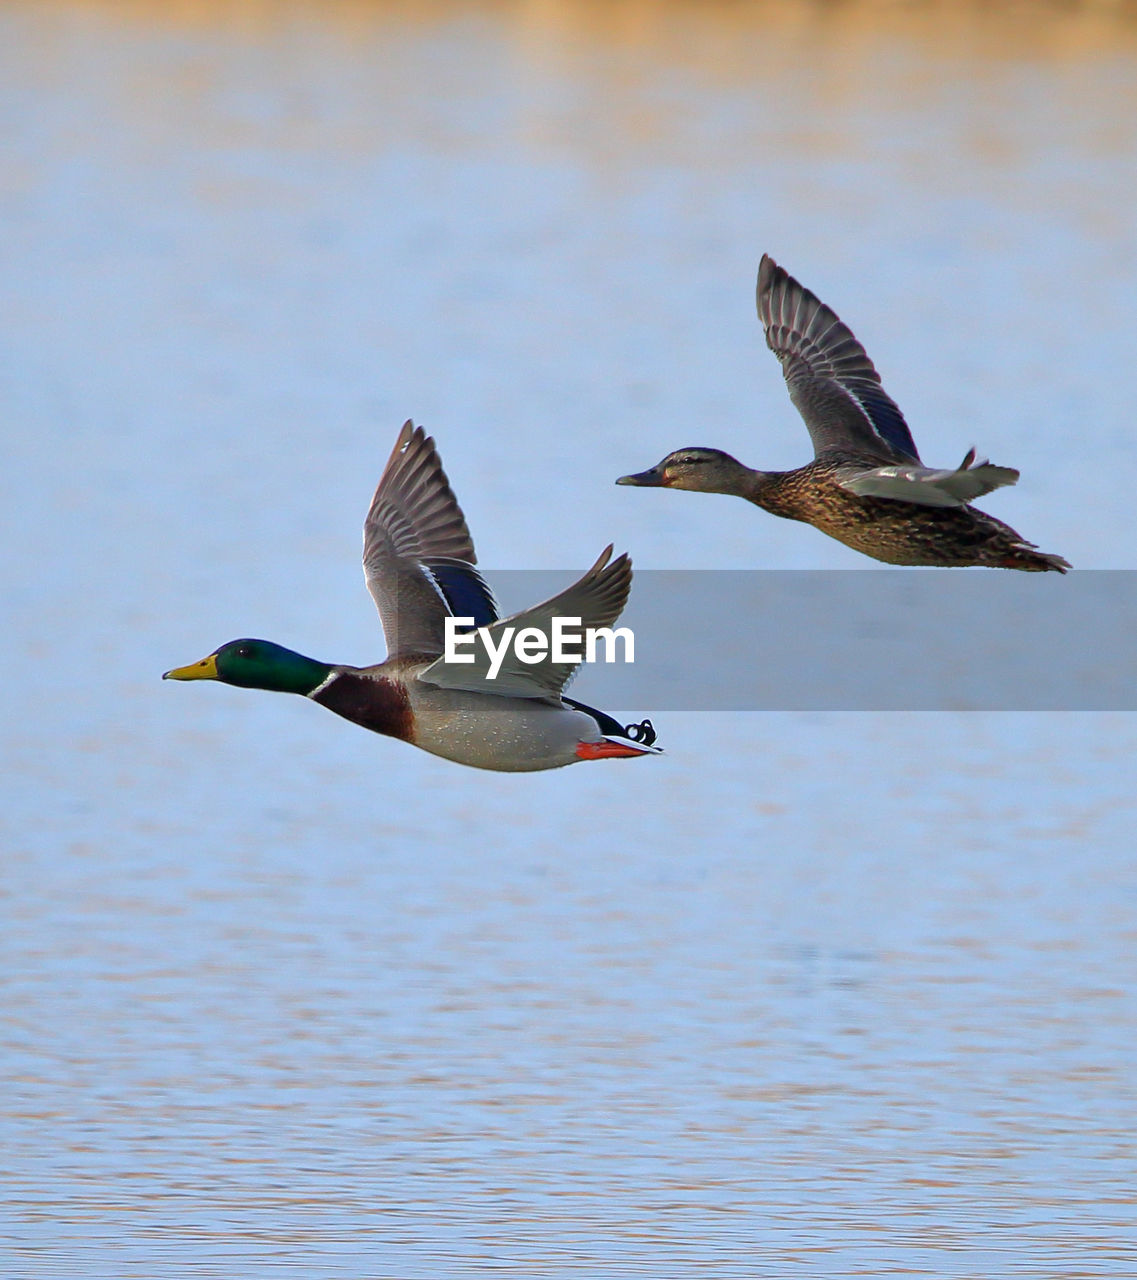 Mallard ducks flying over lake